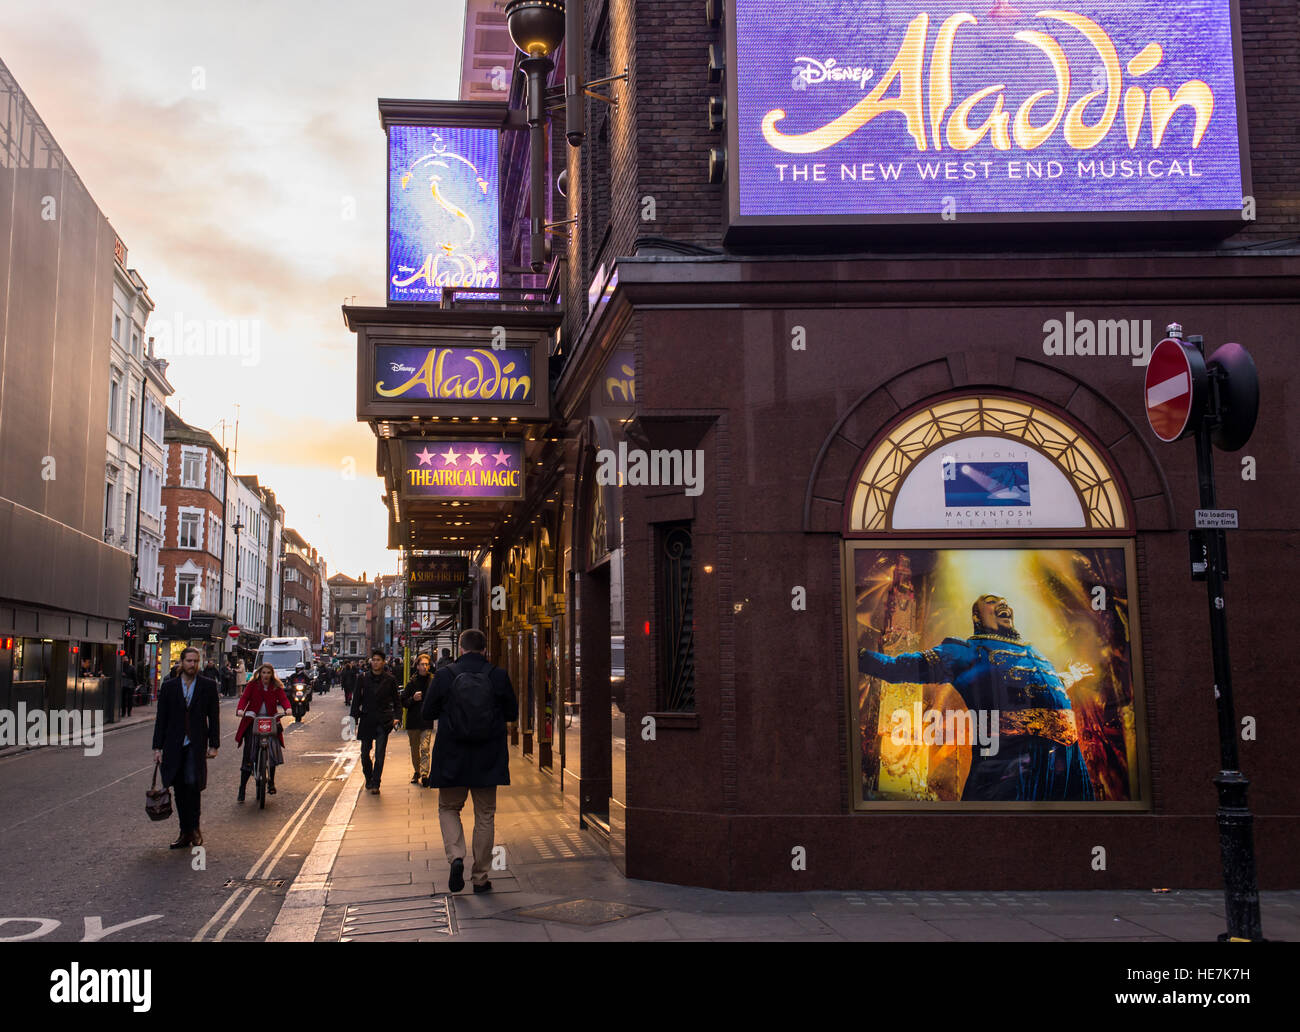 Street View di Prince Edward Theatre in old compton Street, Soho, Londra uk. ora giocando ad Aladdin, Disney's new musical. Foto Stock